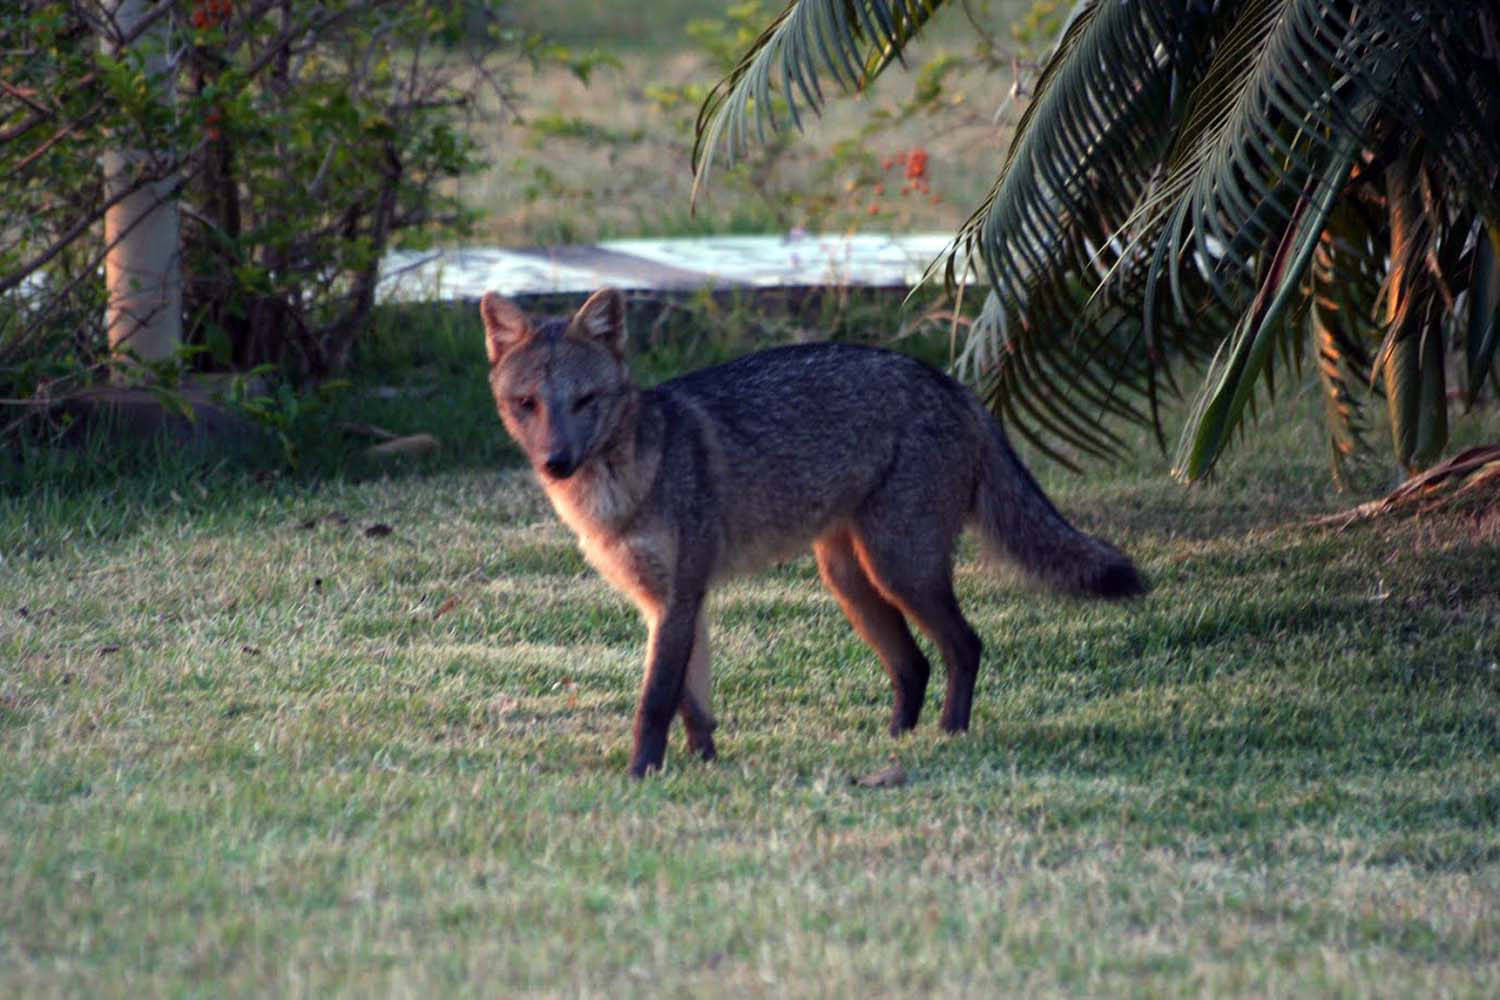 Pantanal fox in the garden in front of the Pousada